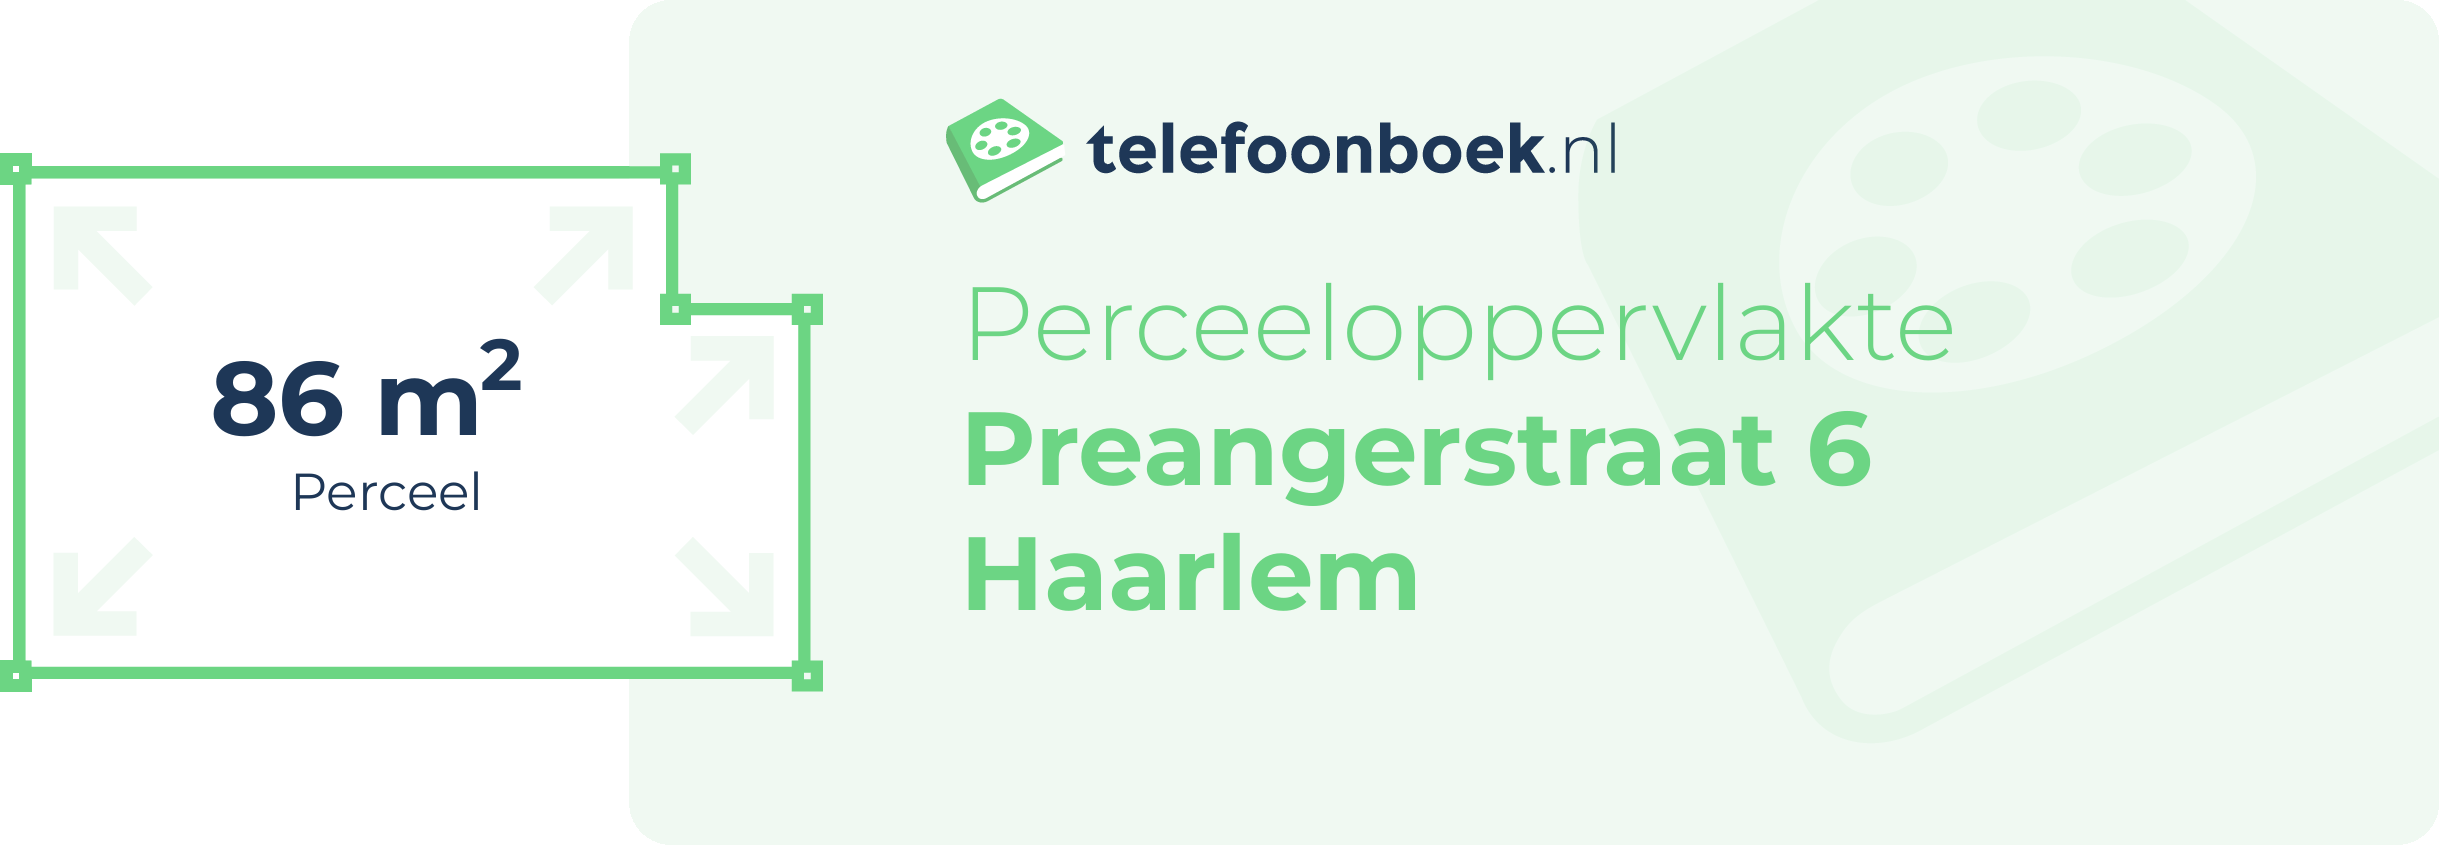 Perceeloppervlakte Preangerstraat 6 Haarlem